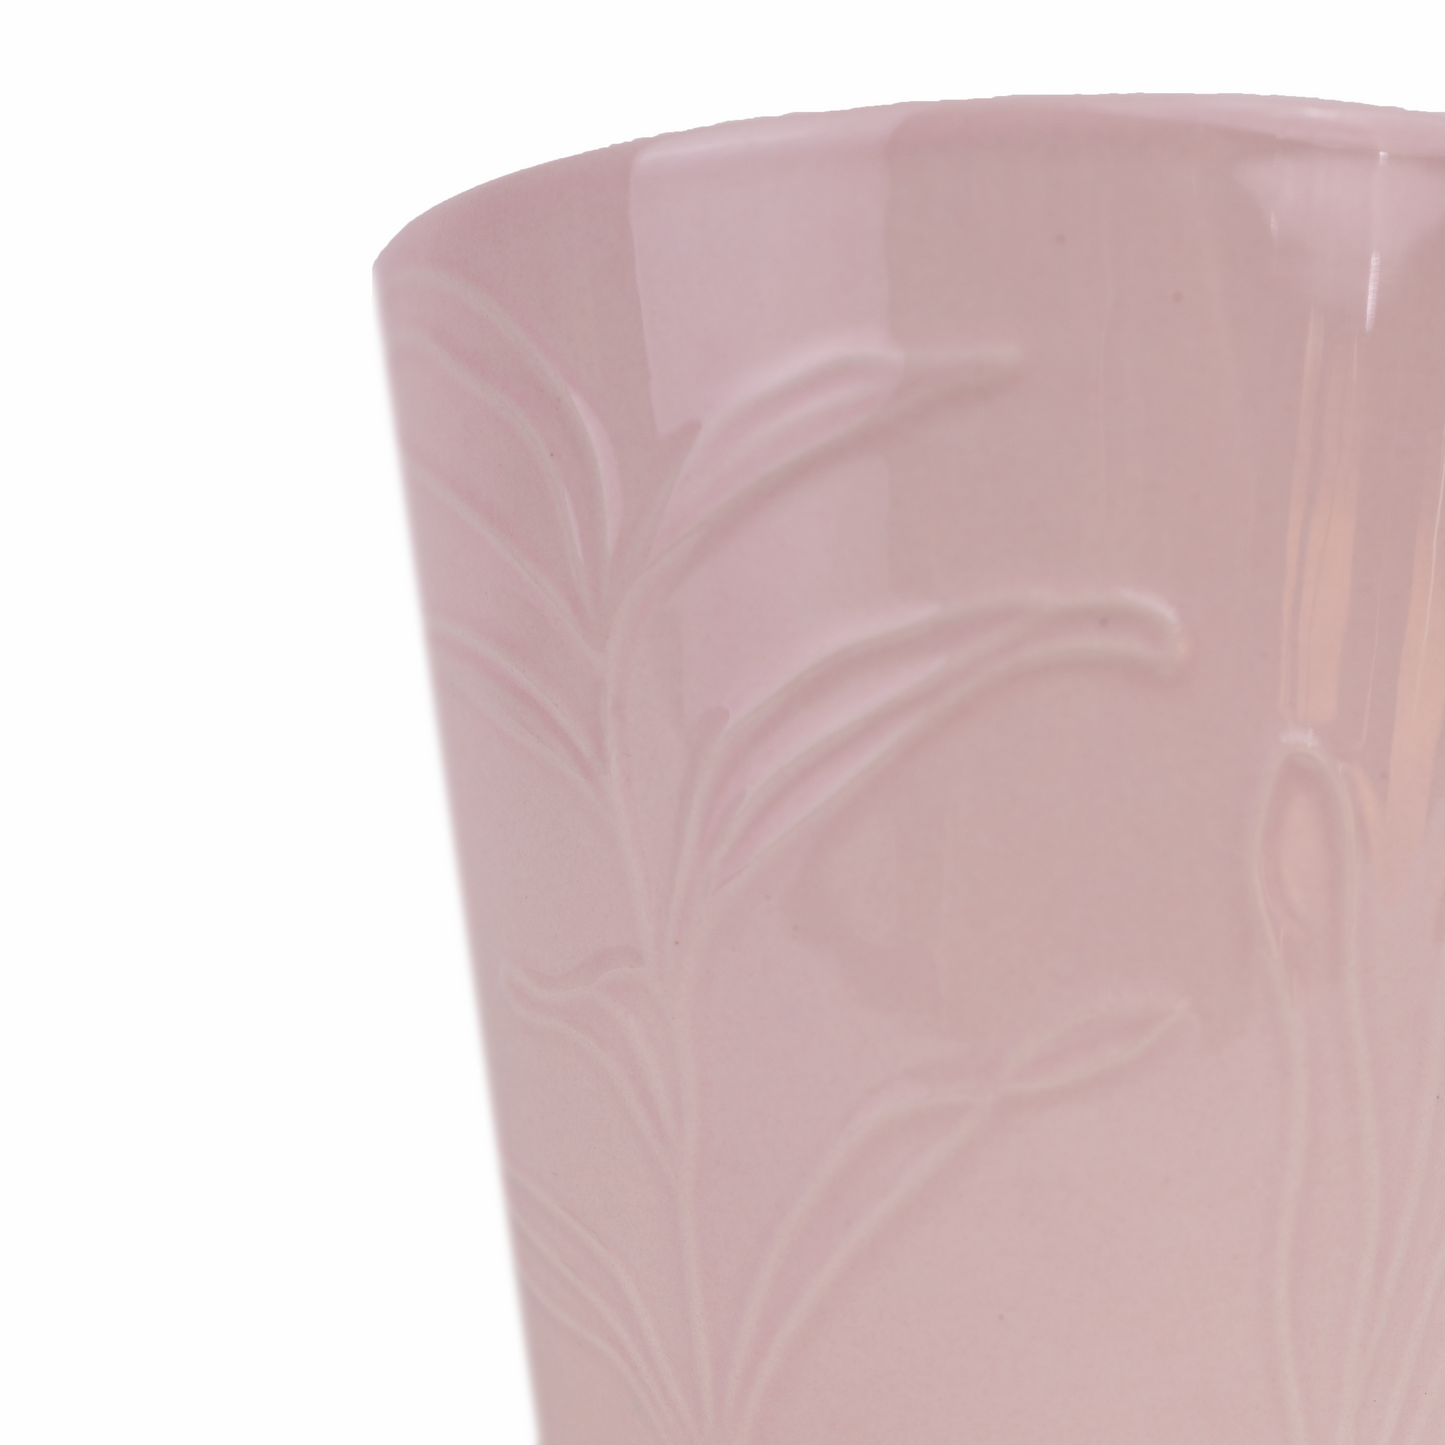 Sharik Assorted  Ceramic Pot - D12cm